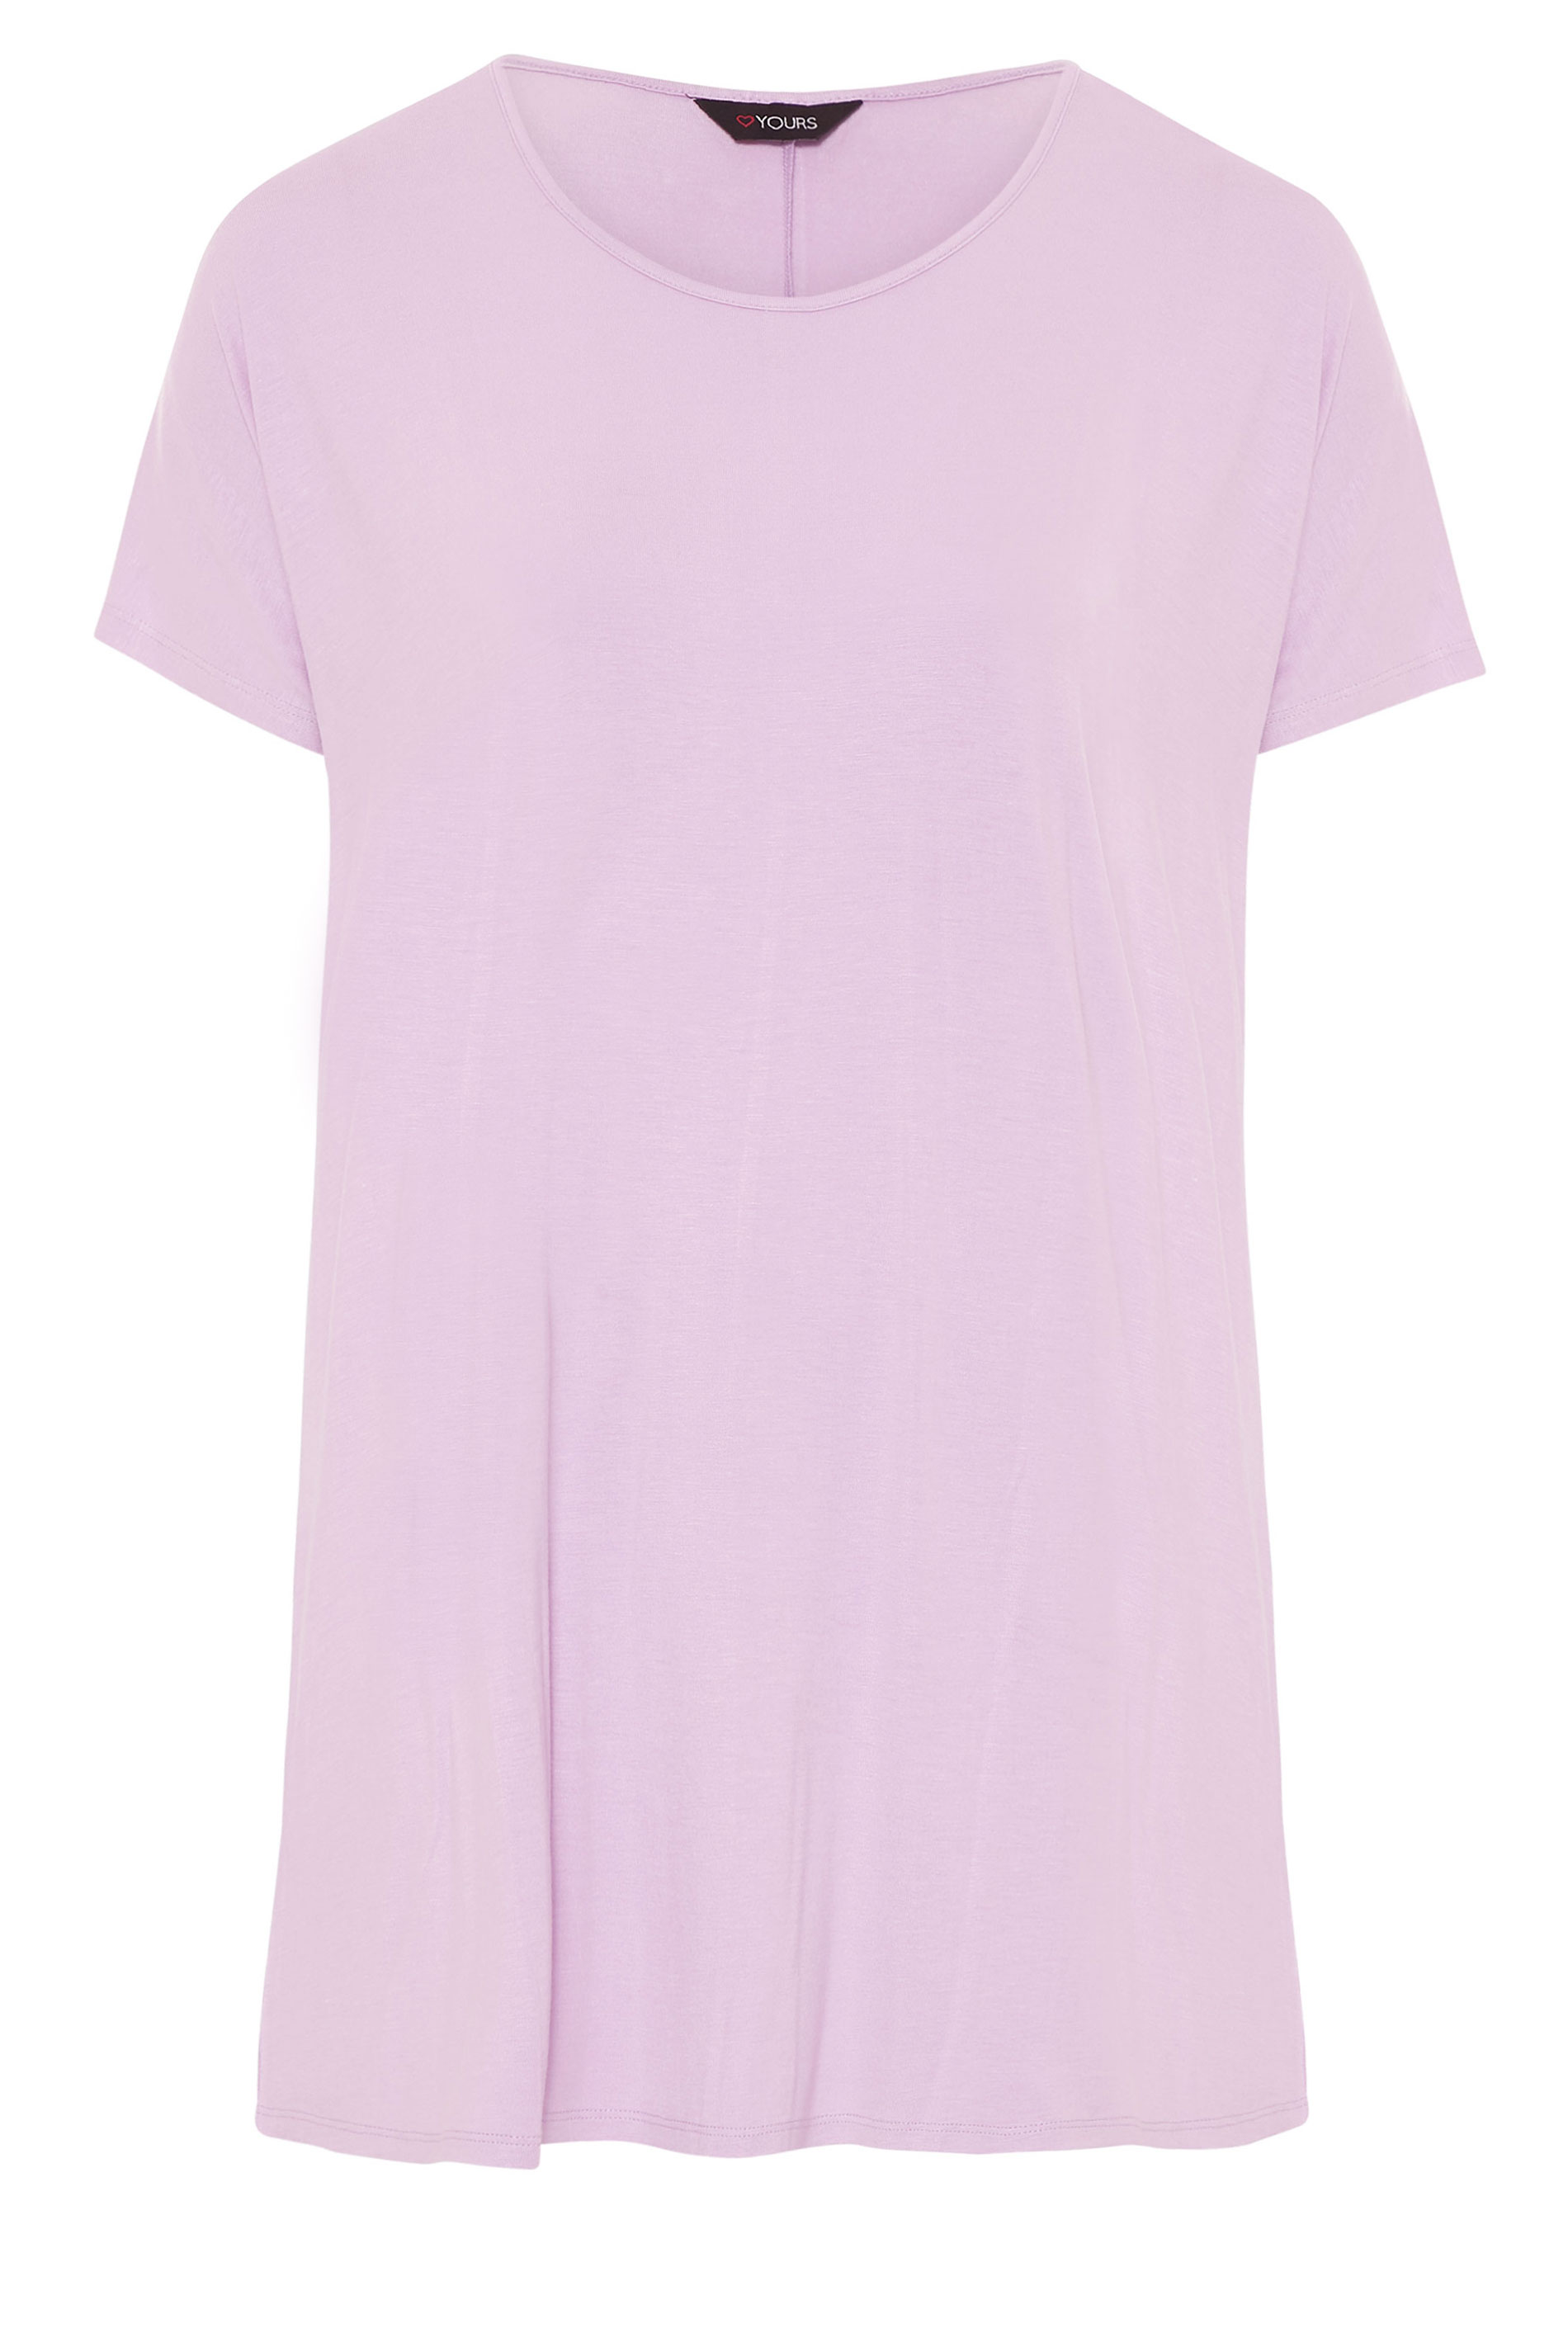 LTS Purple Soft Touch T-Shirt | Long Tall Sally